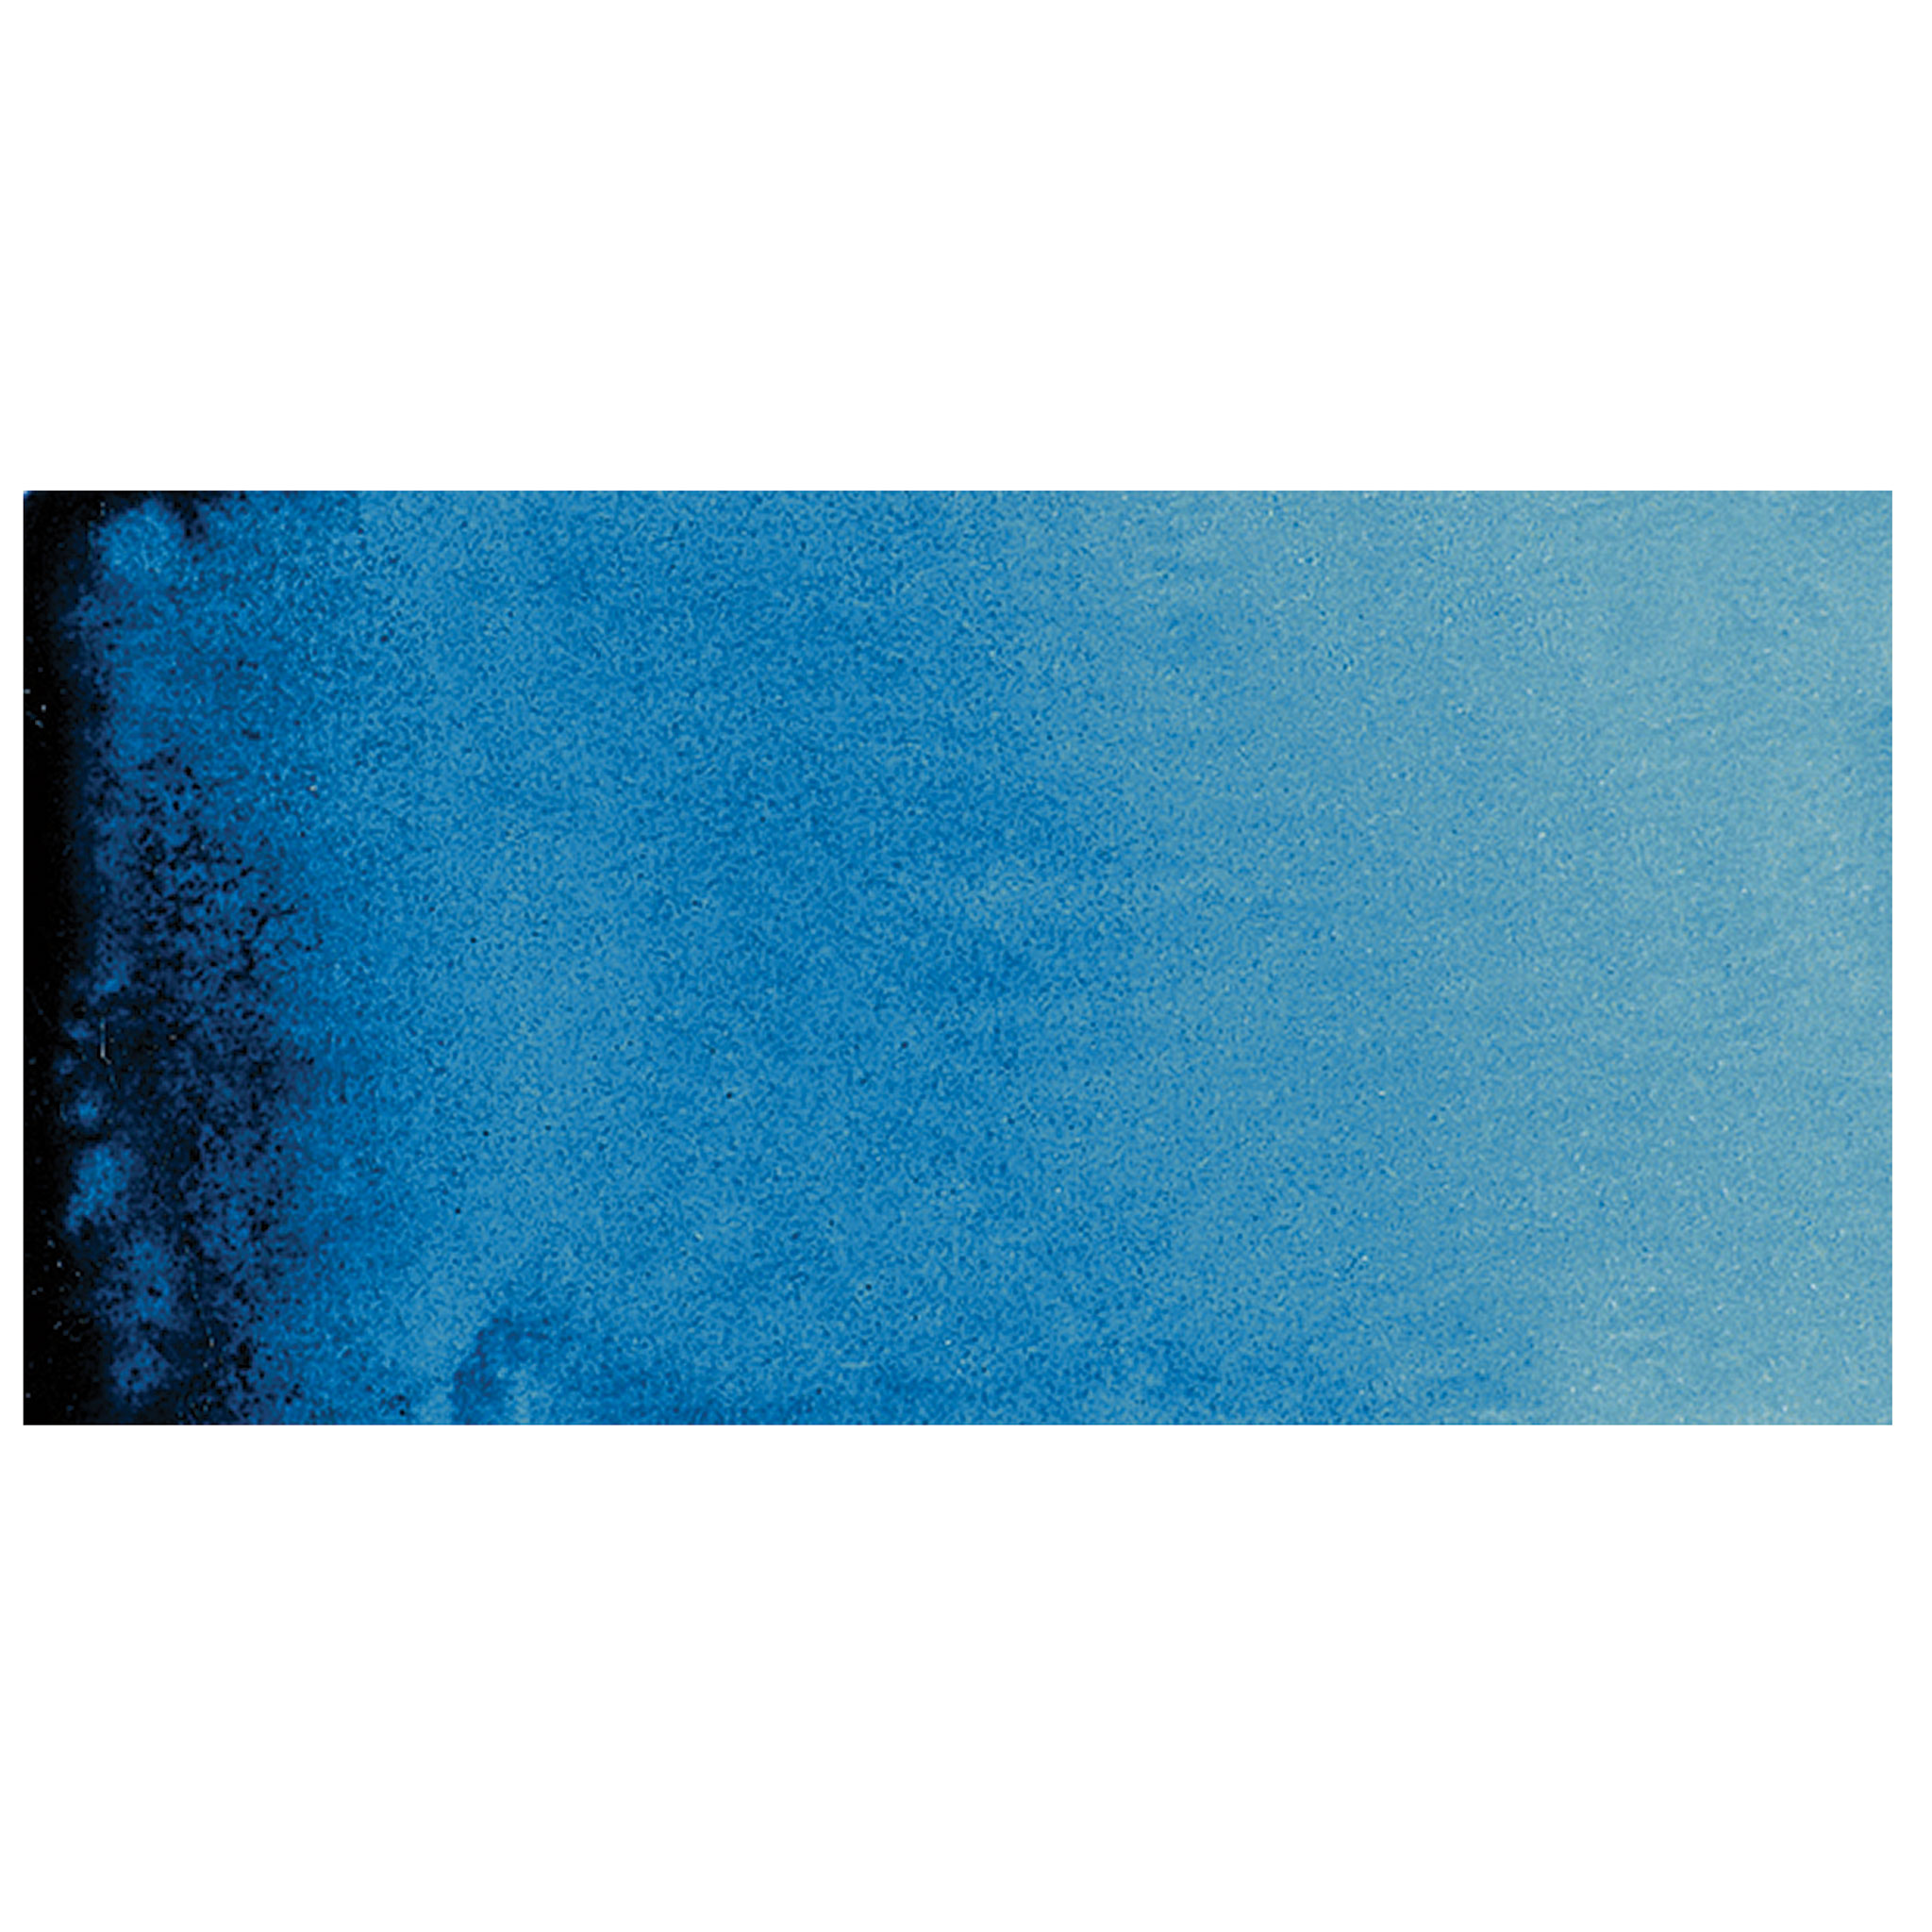 Sennelier French Artists' Watercolor - Cobalt Blue, 21 ml Tube, BLICK Art  Materials